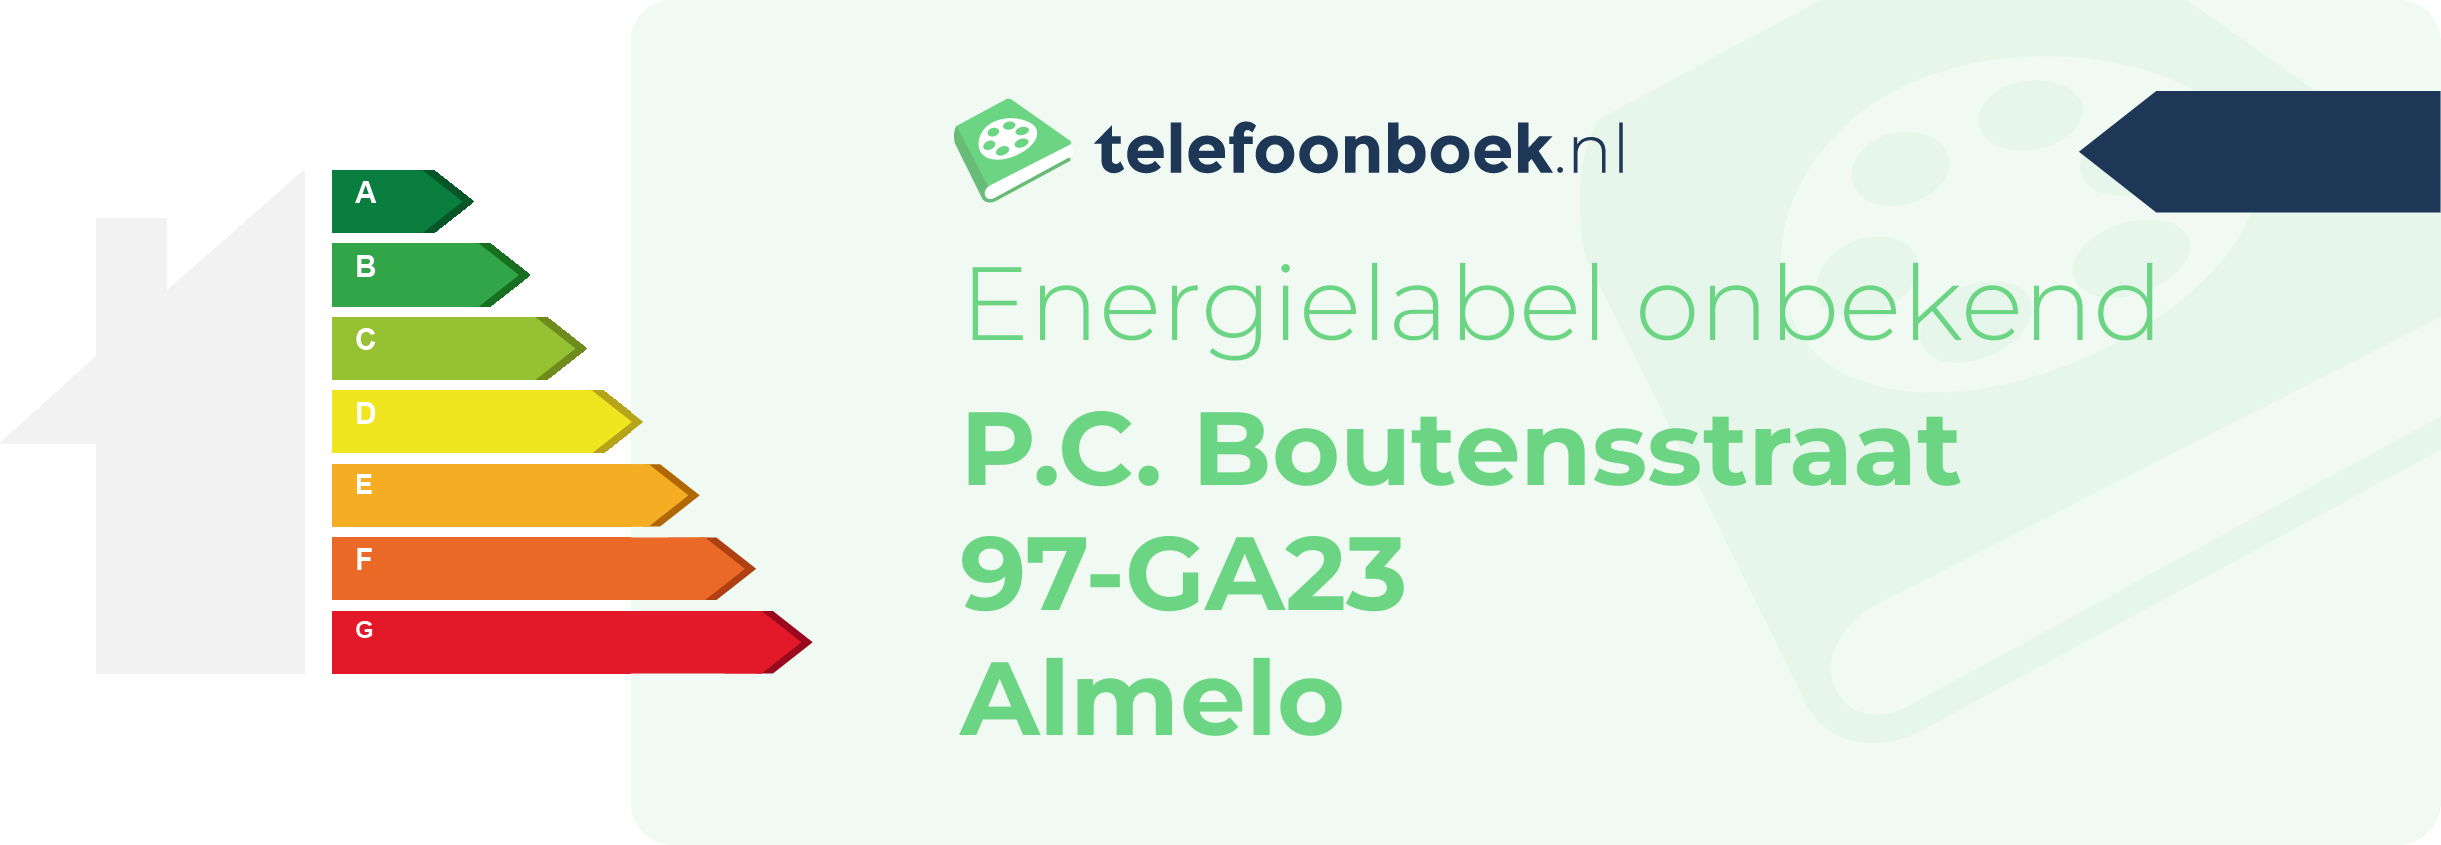 Energielabel P.C. Boutensstraat 97-GA23 Almelo